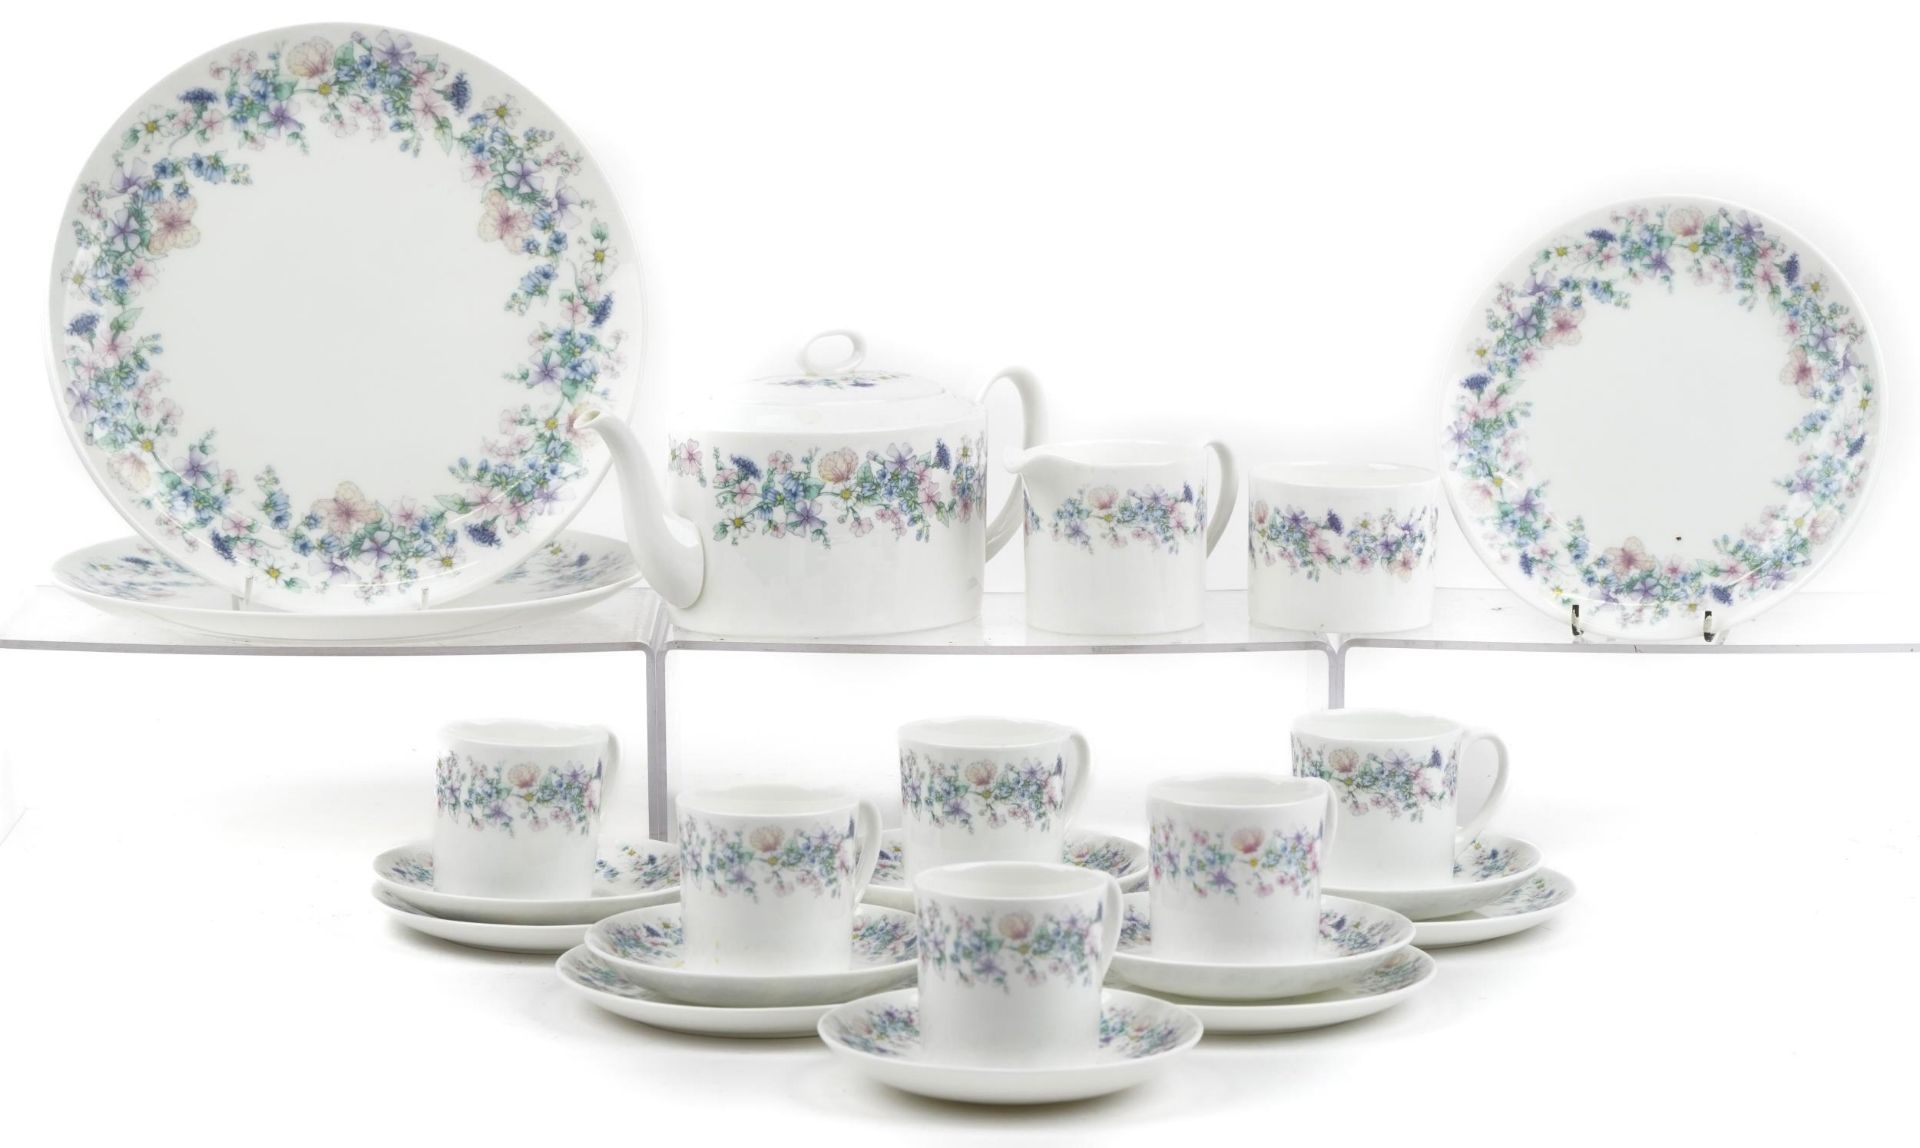 Wedgwood Angela teaware including teapot, milk jug, sugar bowl and trios, the largest 26cm in